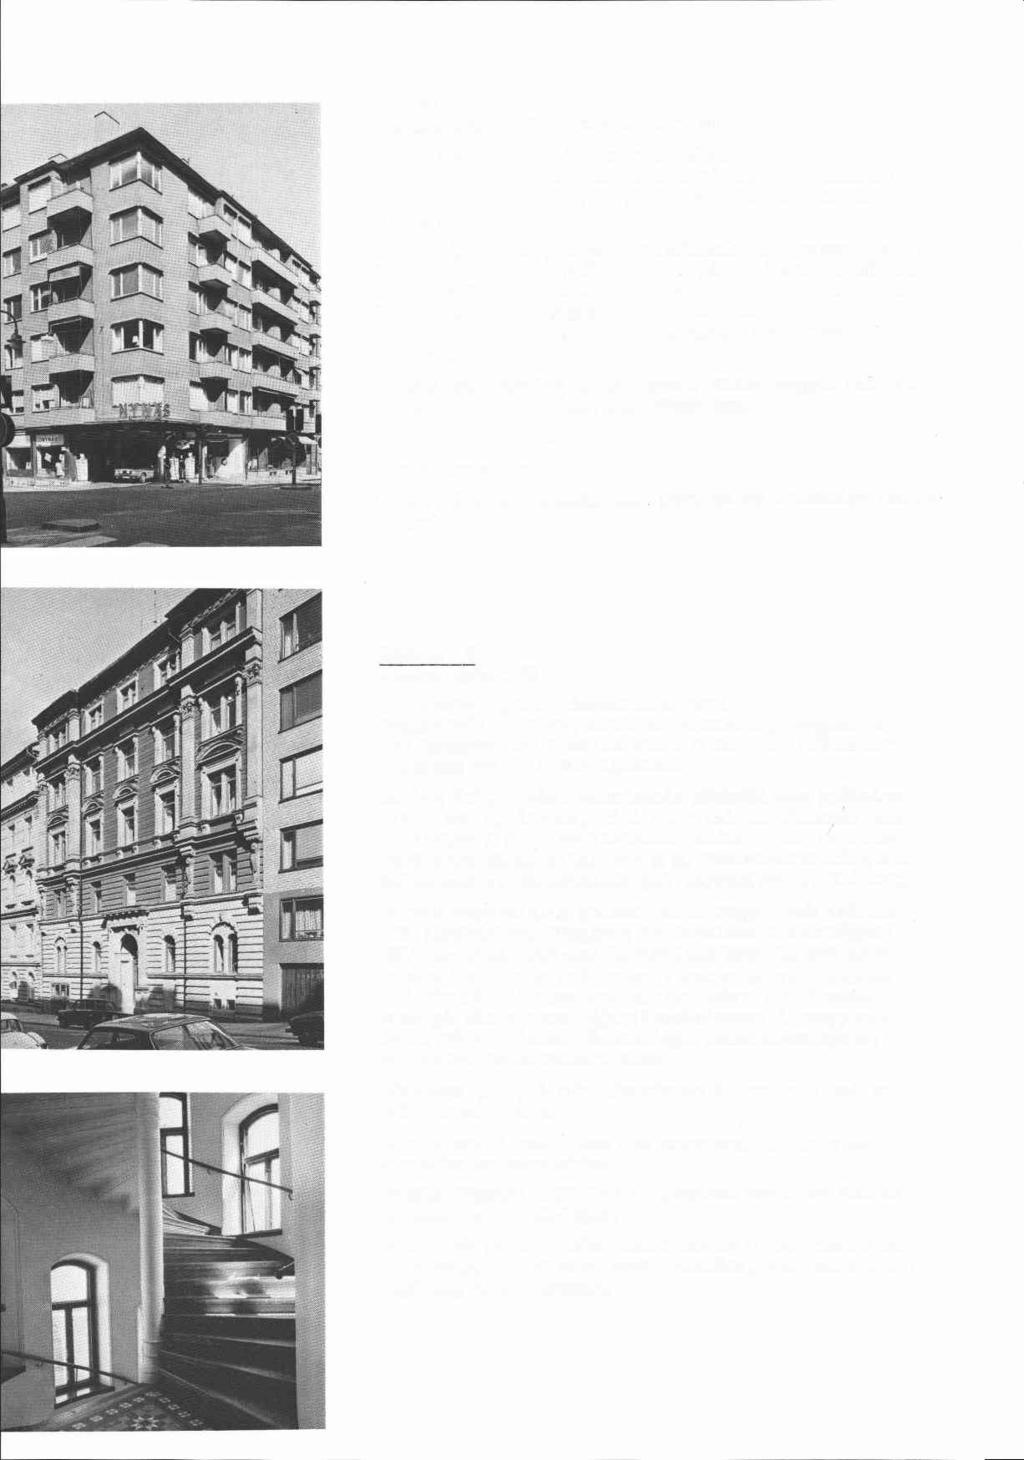 Kuml e t 7 Linnégatan 51-53, Skeppargatan 44 Byggnadsår 1938-39, arkitekt A Bjerke & F Jacobsson, byggherre "Kumlet 7, 8 upa", byggmästare A B jerke & K A Bjerke. Gathus (hörnhus), 6 vån.